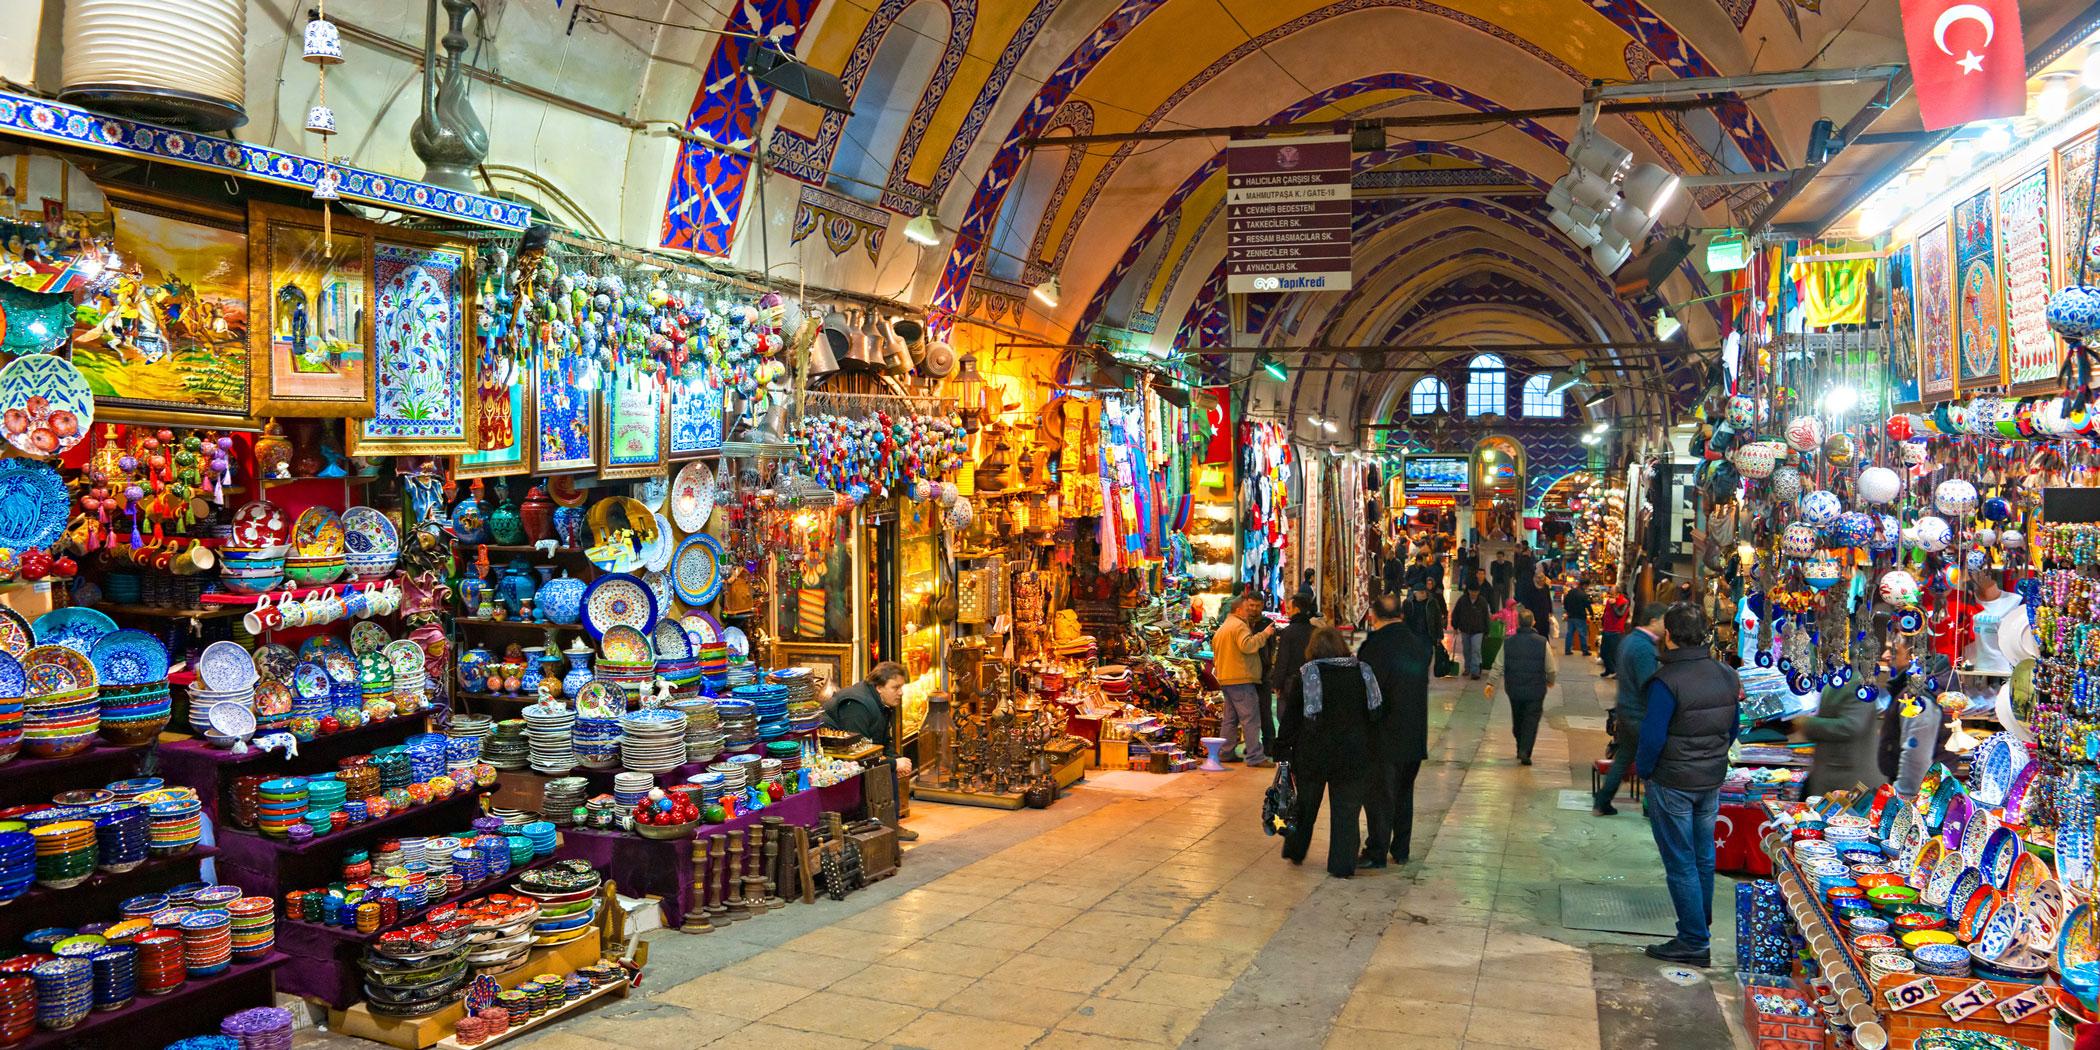 Grand bazaar shops in Istanbul. Photo Adobe Stock